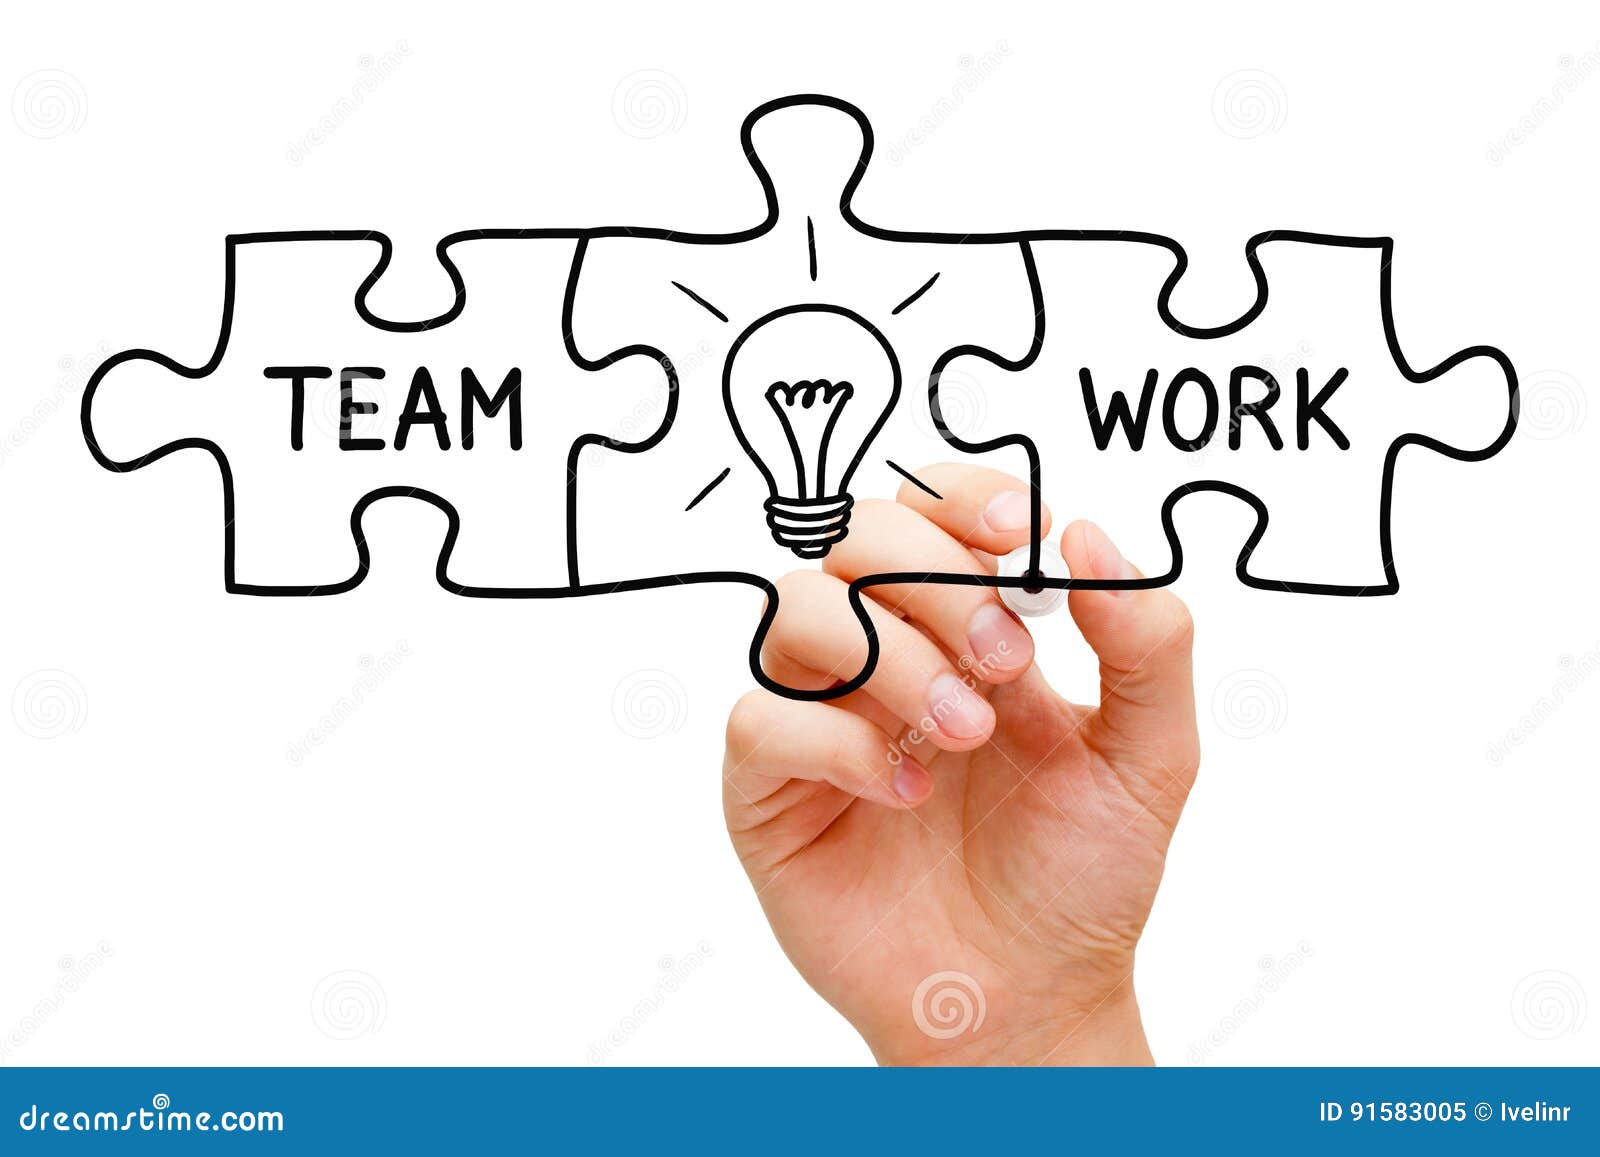 teamwork great idea puzzle concept